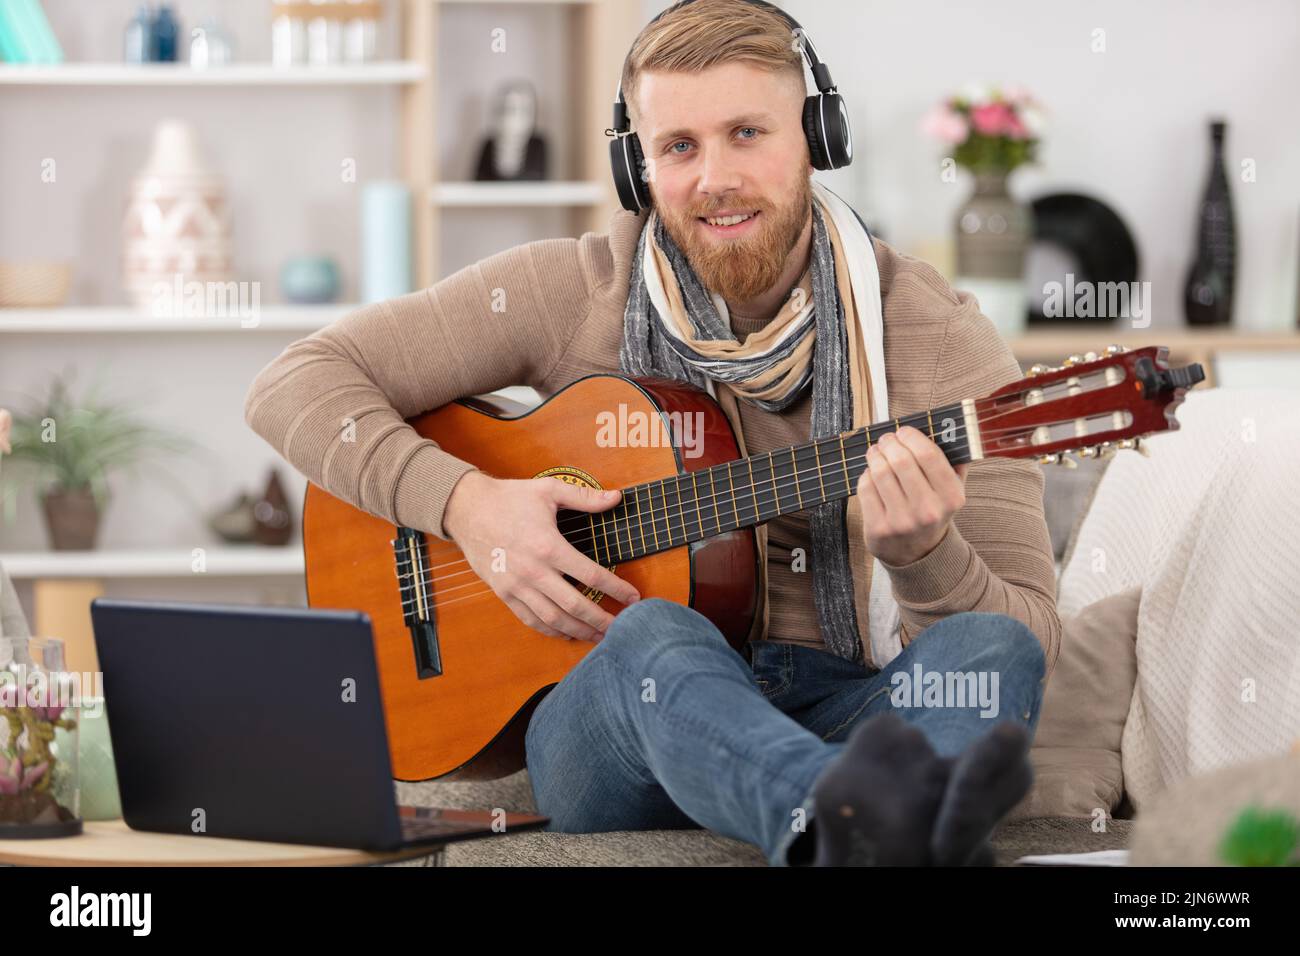 el hombre está aprendiendo a tocar la guitarra Foto de stock